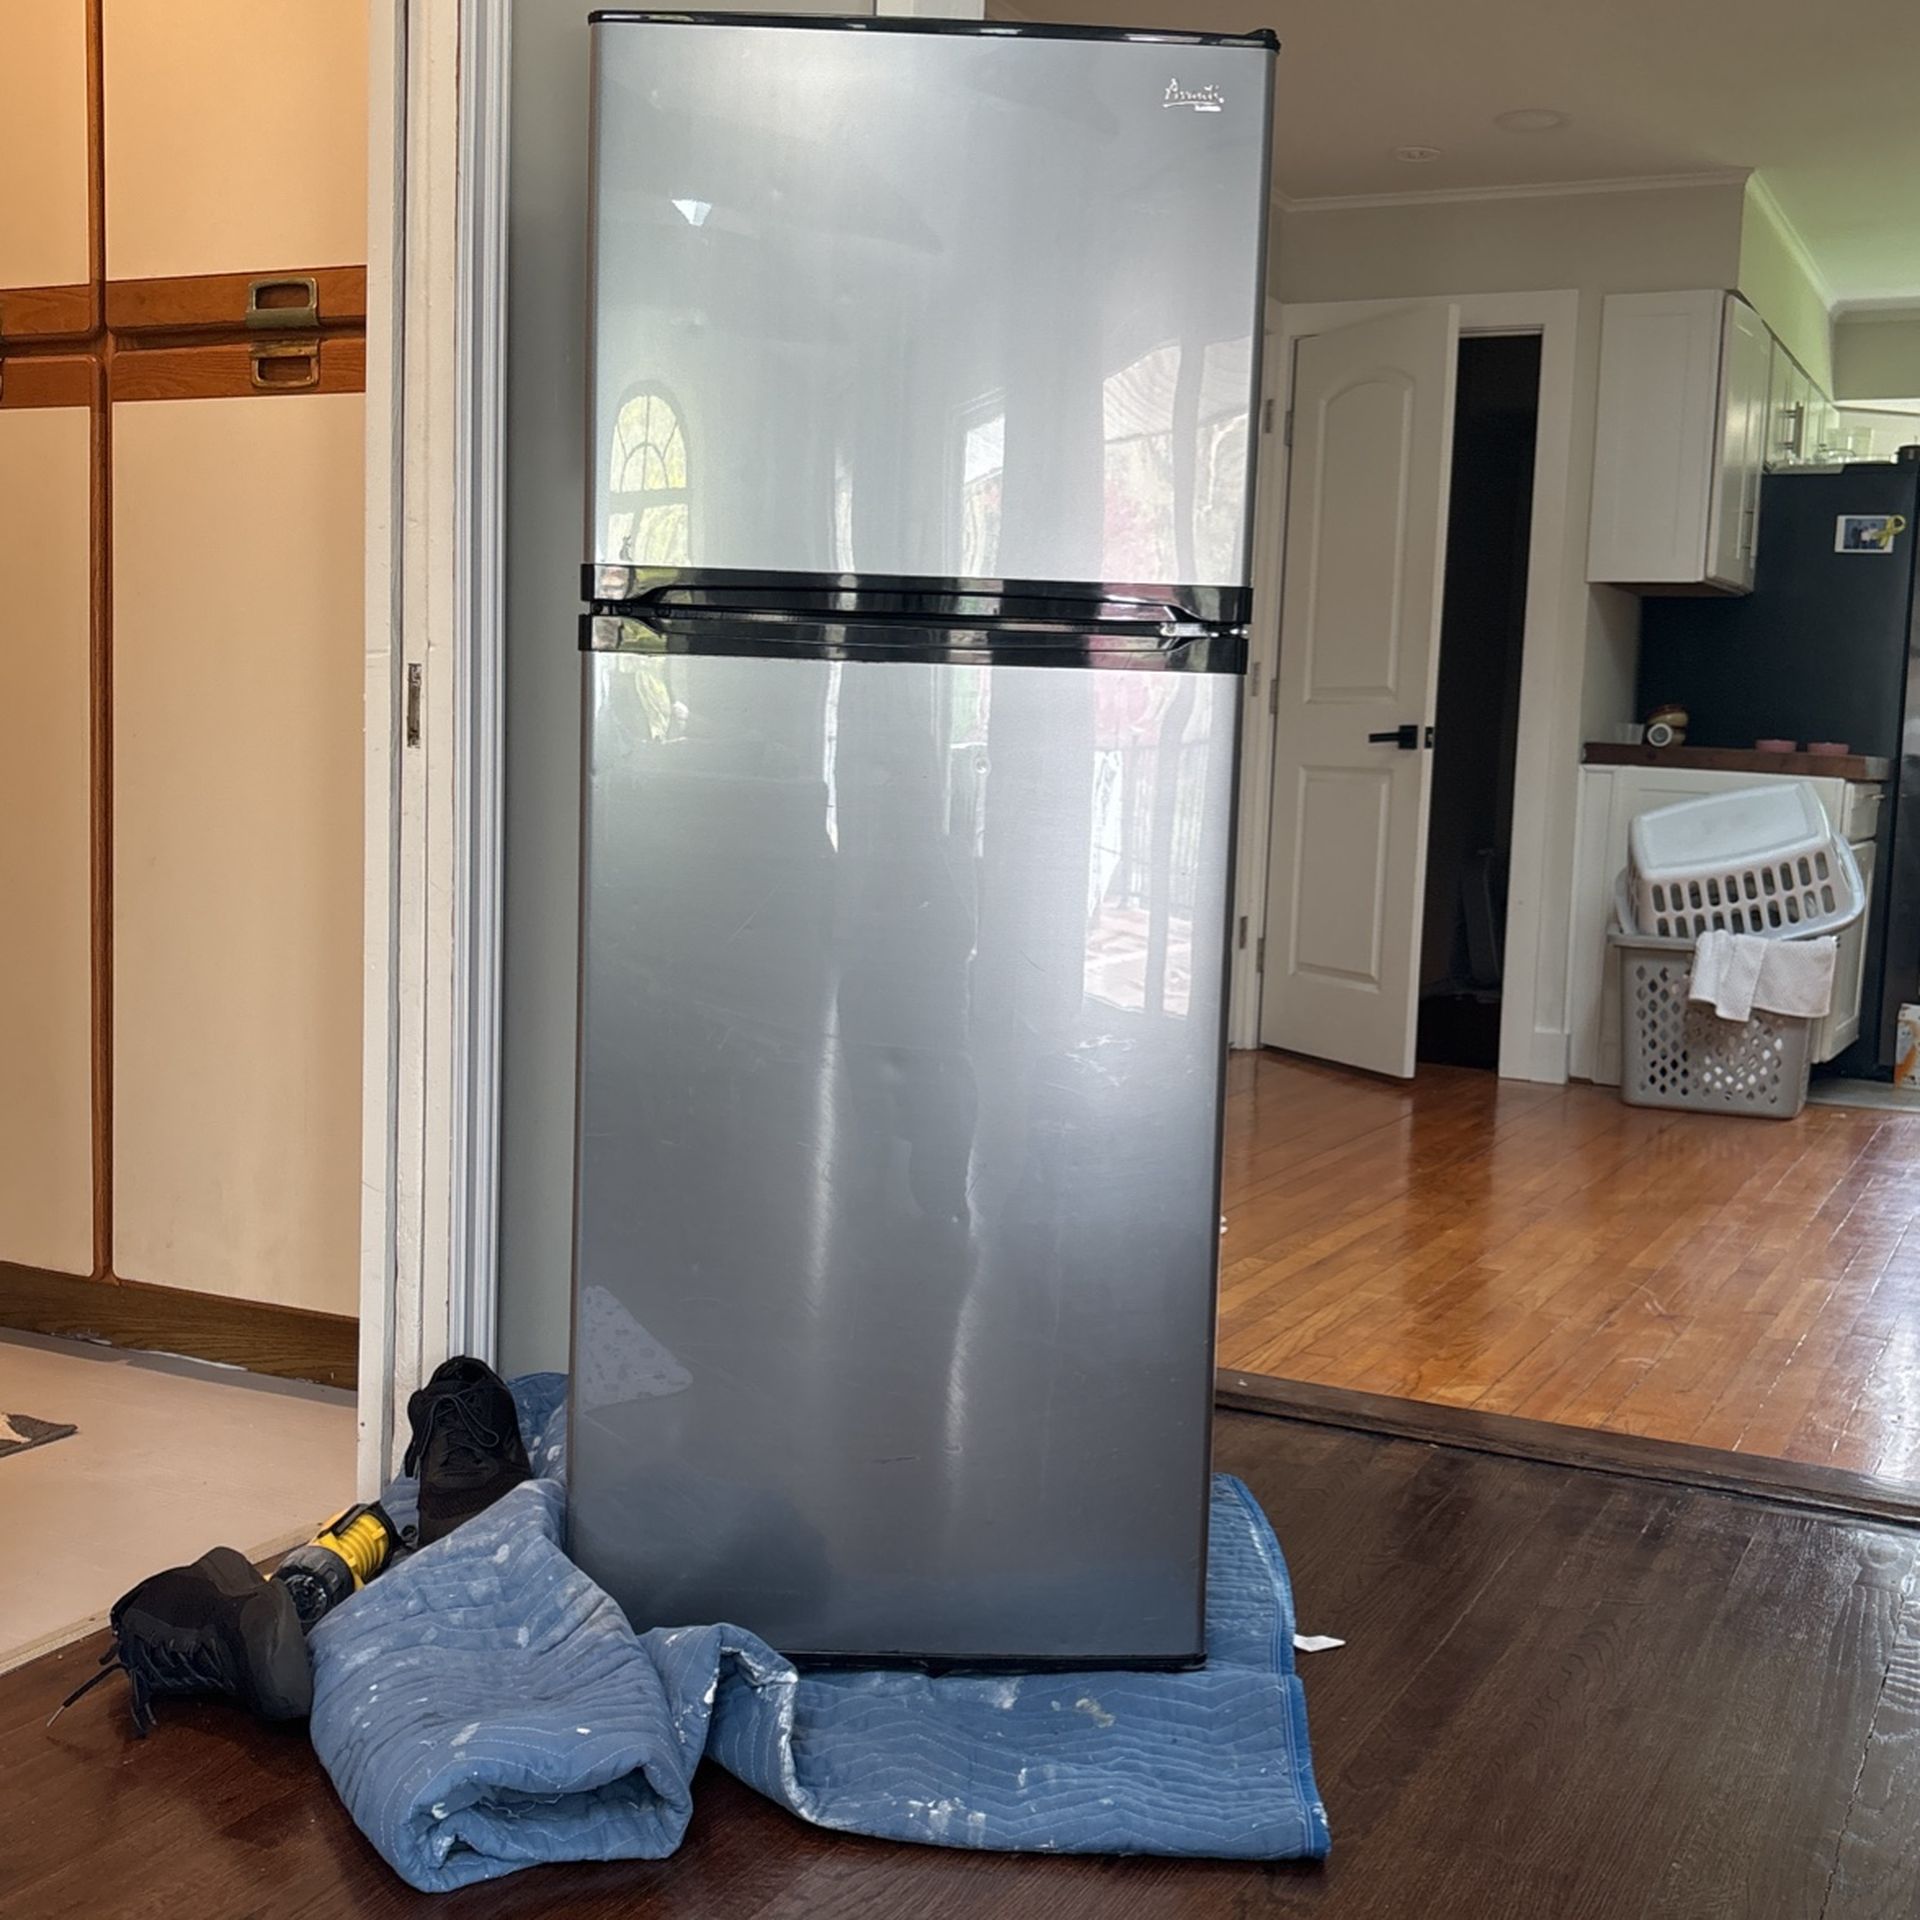 Refrigerator/ Freezer 